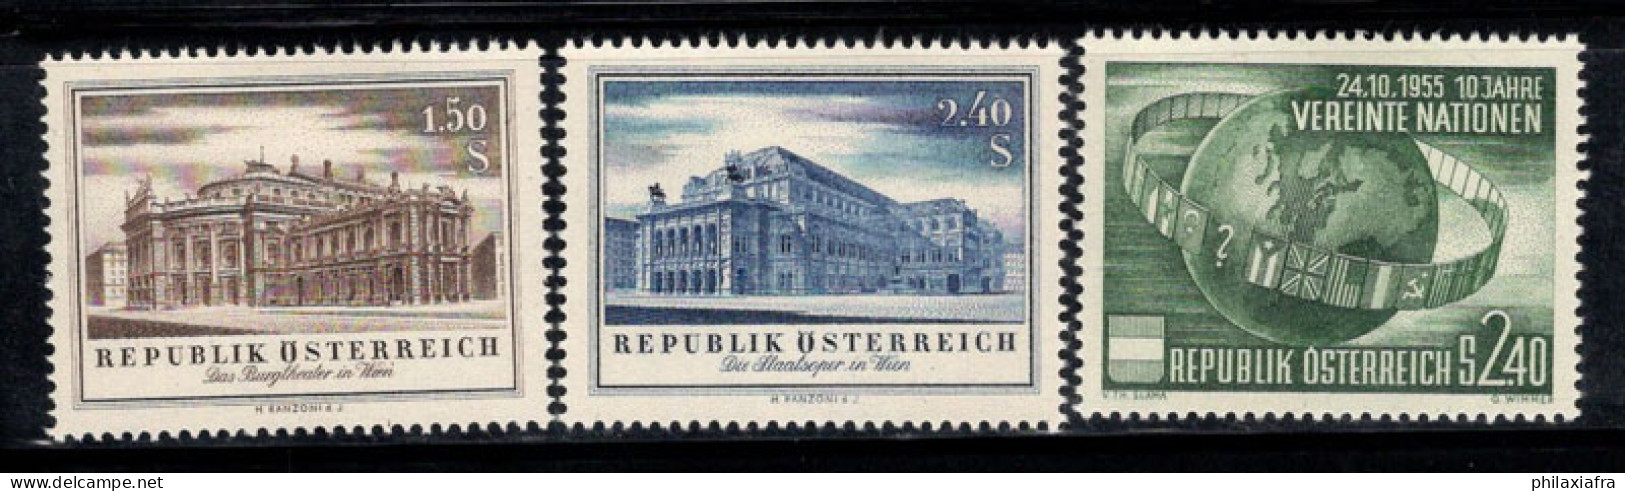 Autriche 1955 Mi. 1020-1022 Neuf * MH 100% ONU, THÉÂTRE, Opéra - Unused Stamps